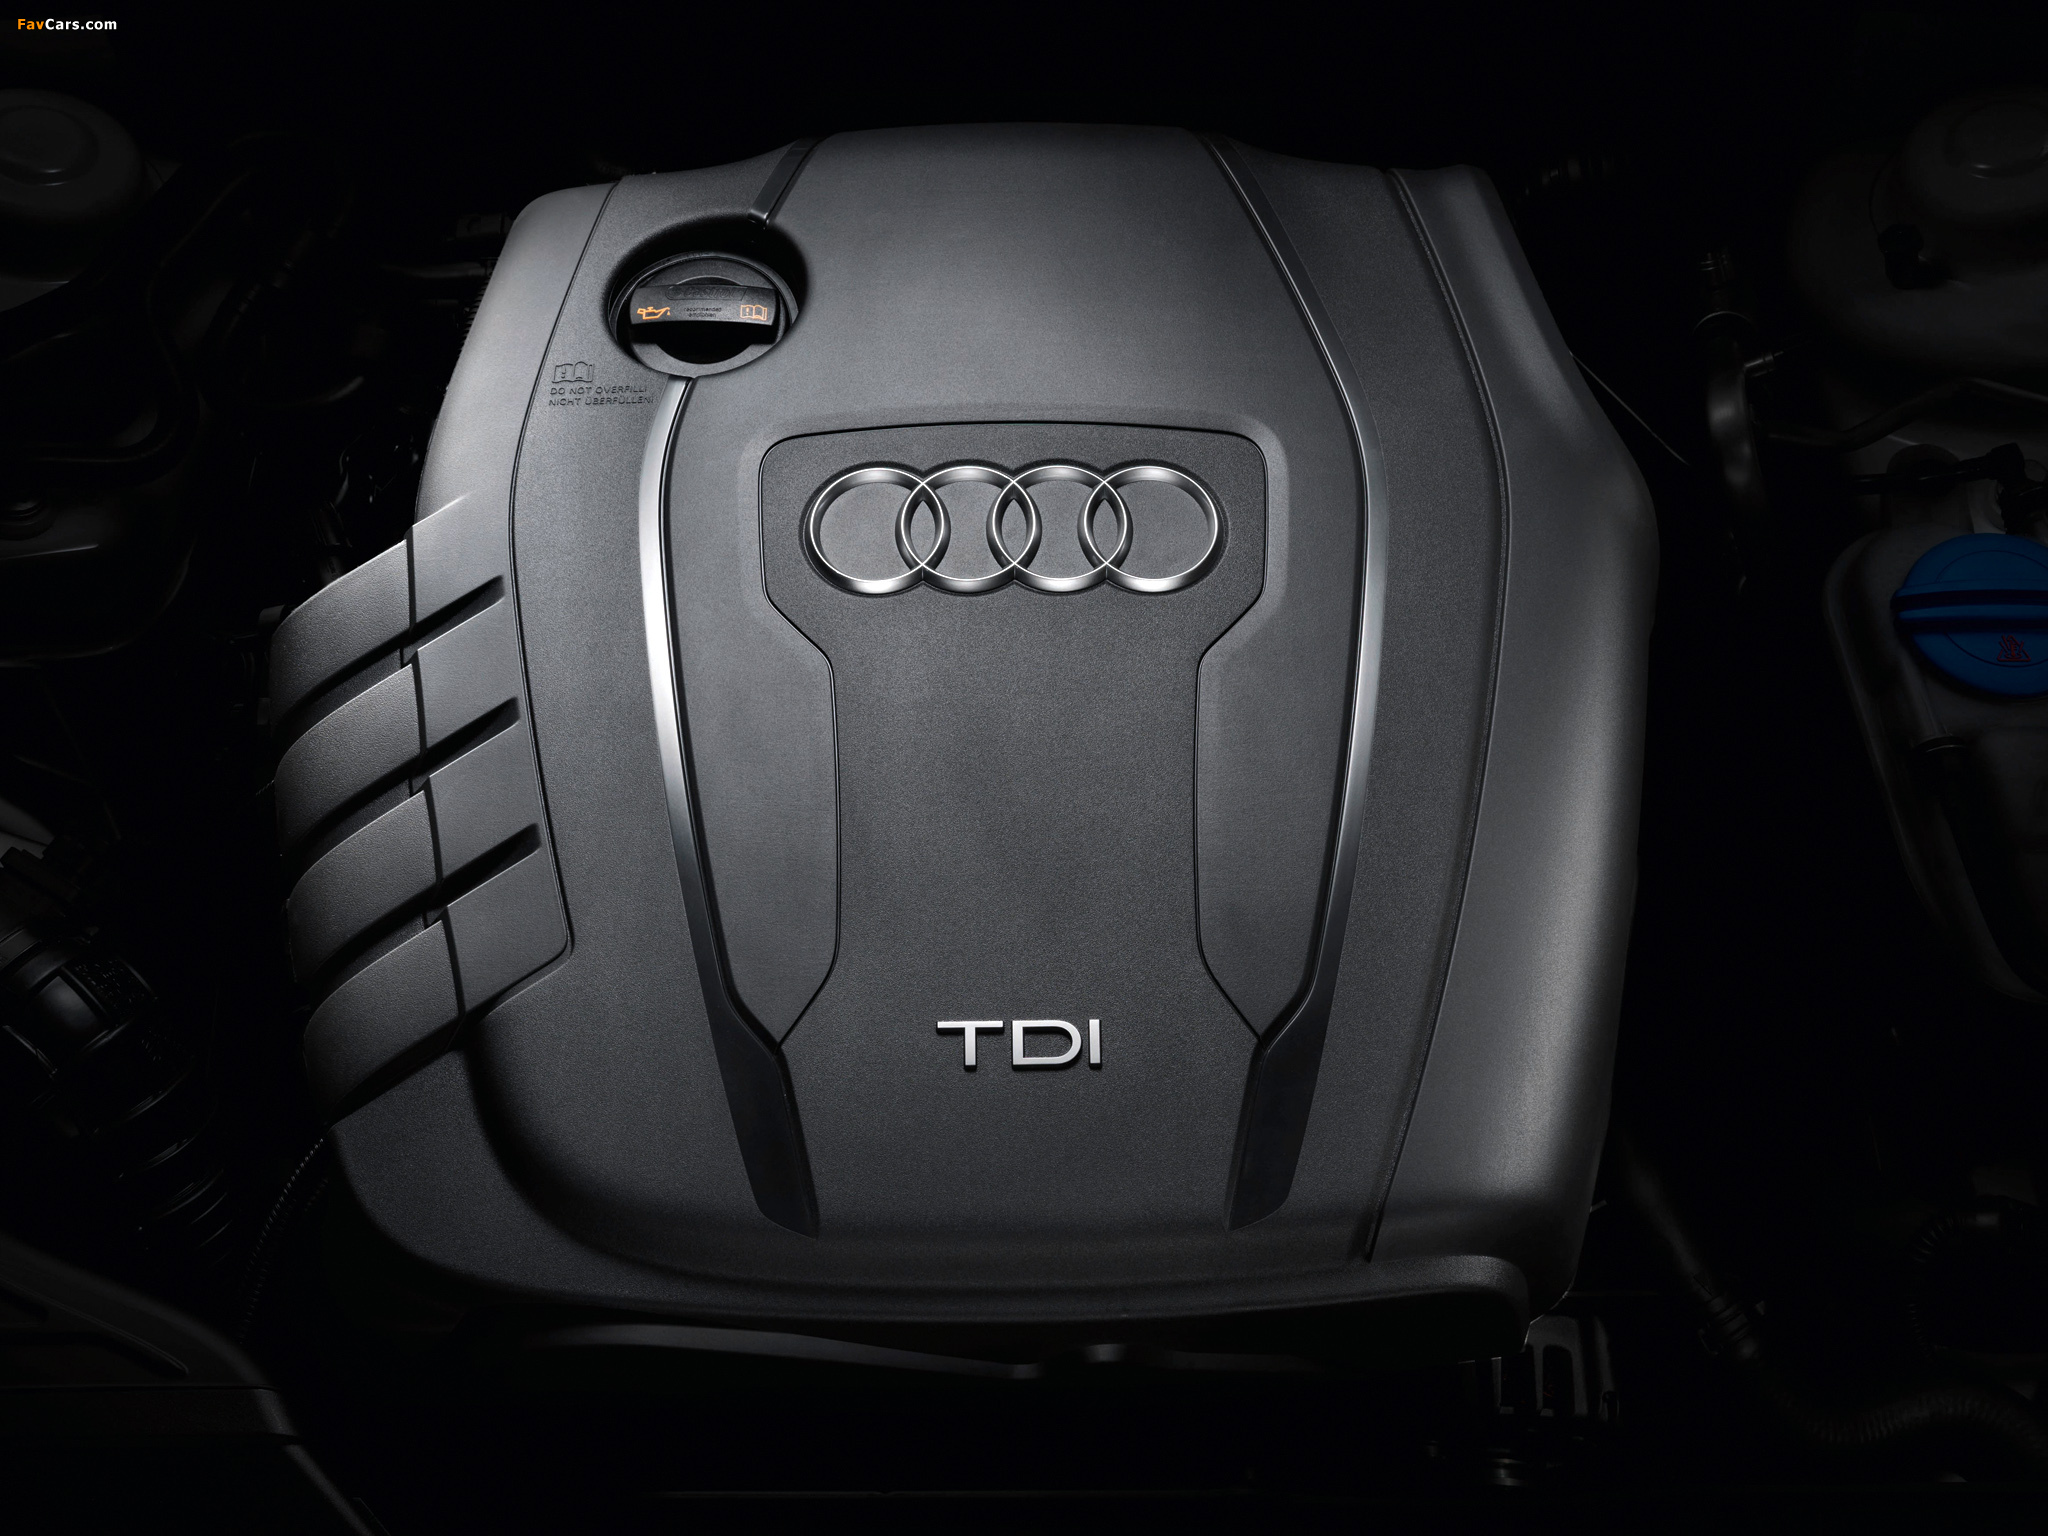 Audi A4 2.0 TDI quattro Avant (B8,8K) 2012 pictures (2048 x 1536)